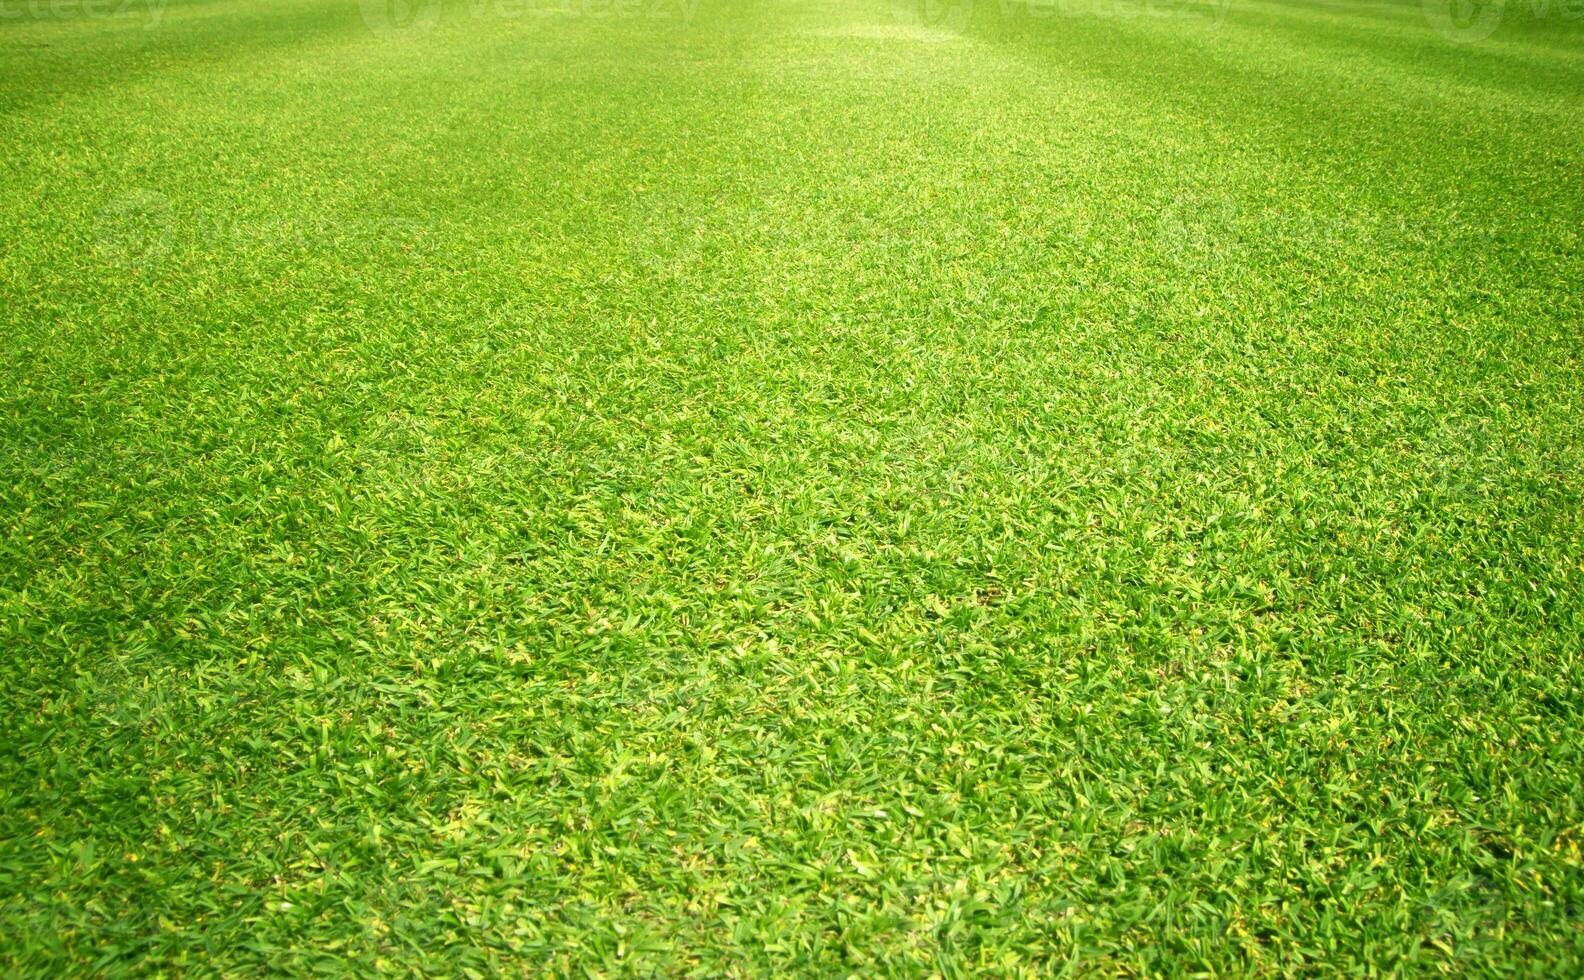 grön gräs gräsmatta golf kurs bakgrund foto